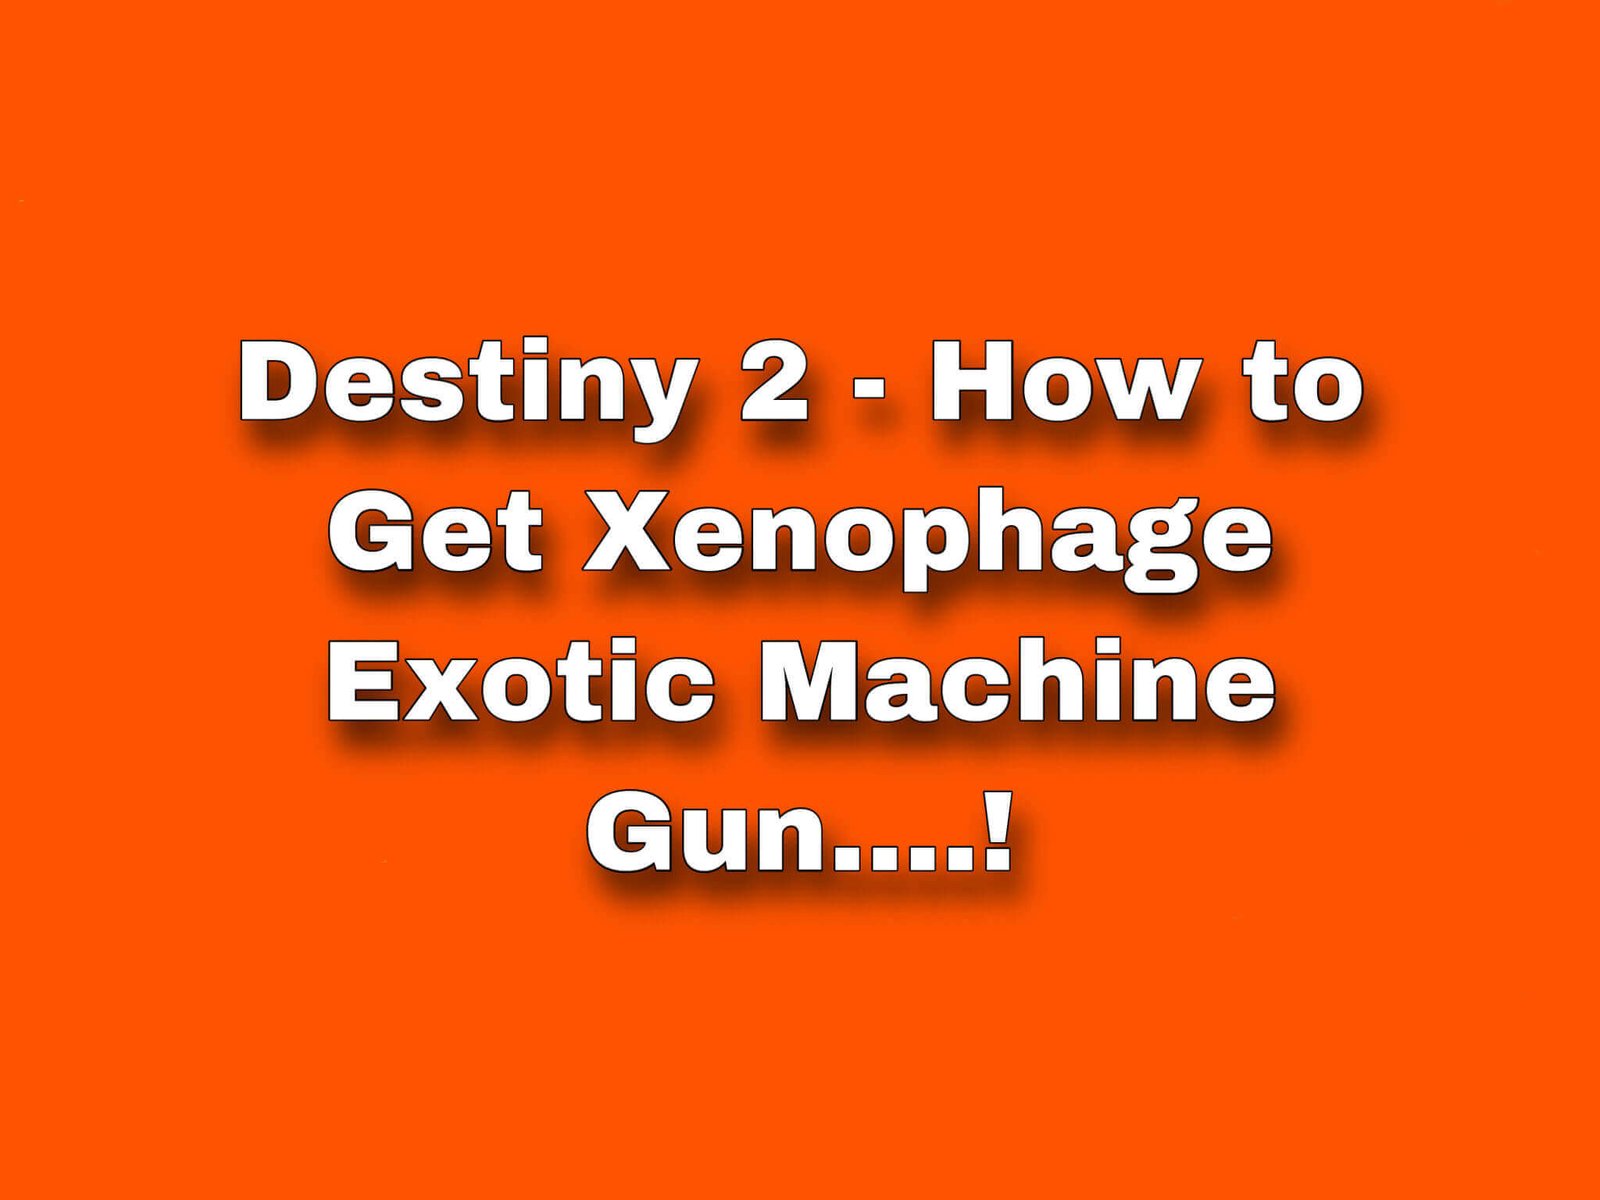 https://shyoz.com/wp-content/uploads/2021/02/Xenophage-Exotic-Machine-Gun.jpeg